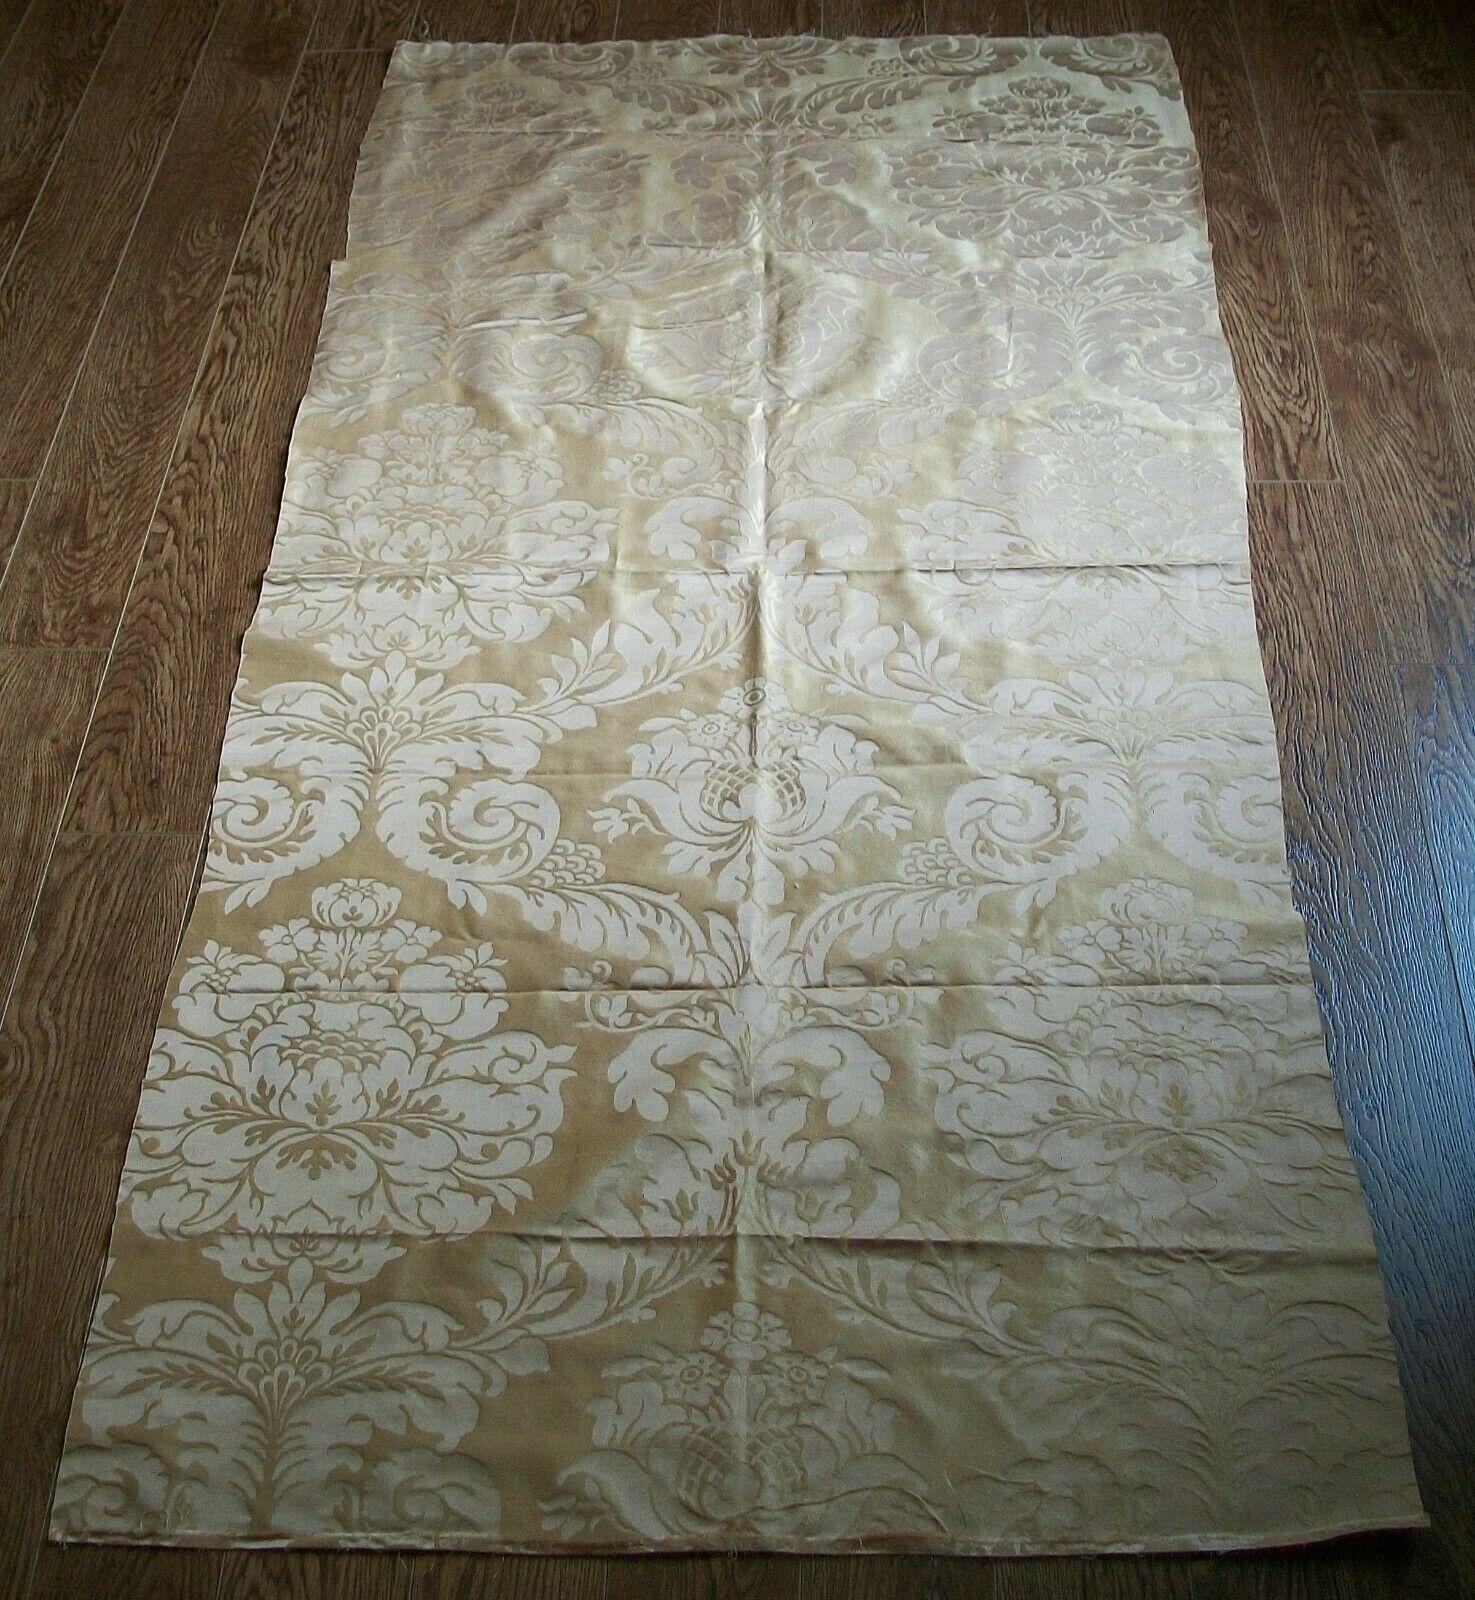 Woven Vintage Cotton Blend Damask Fabric Remnant, Satin Finish, C.1980's For Sale